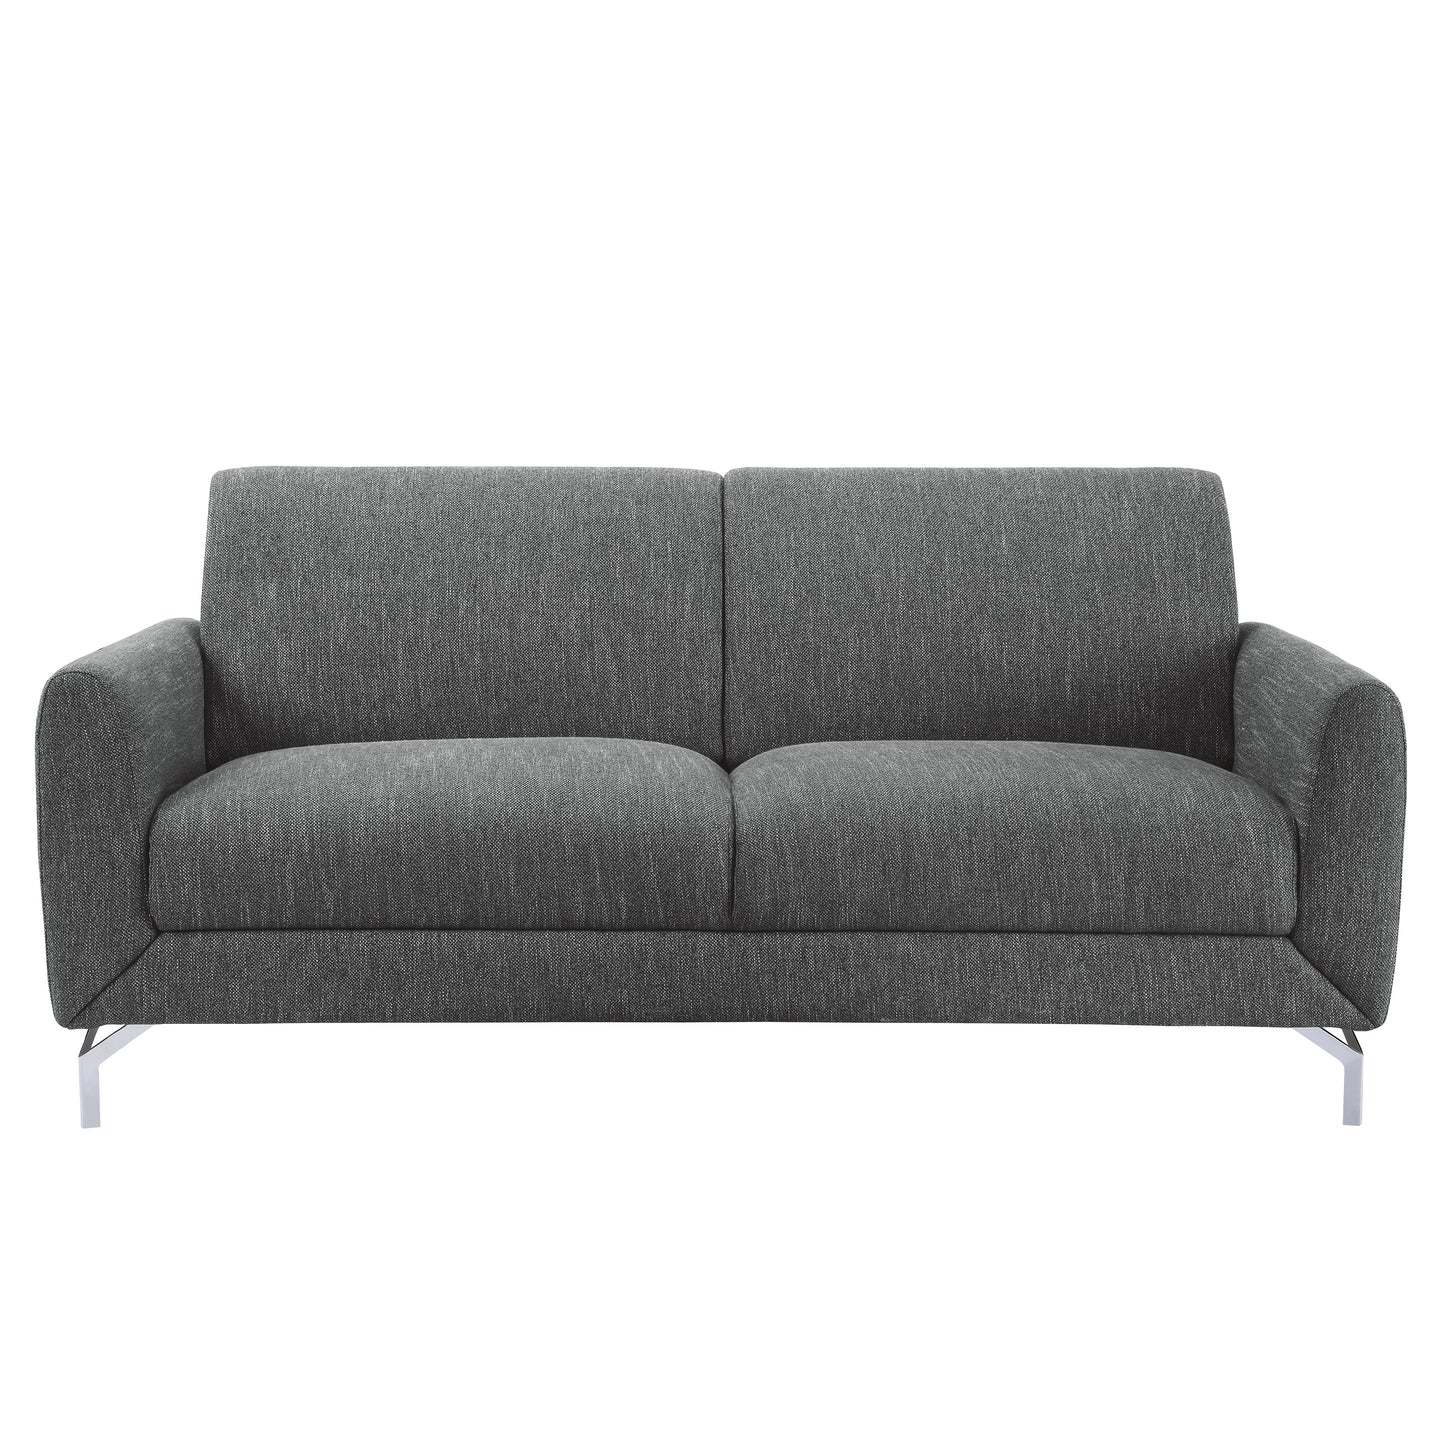 Venture Sofa DARK GREY CLEARANCE WHILE SUPPLIES LAST